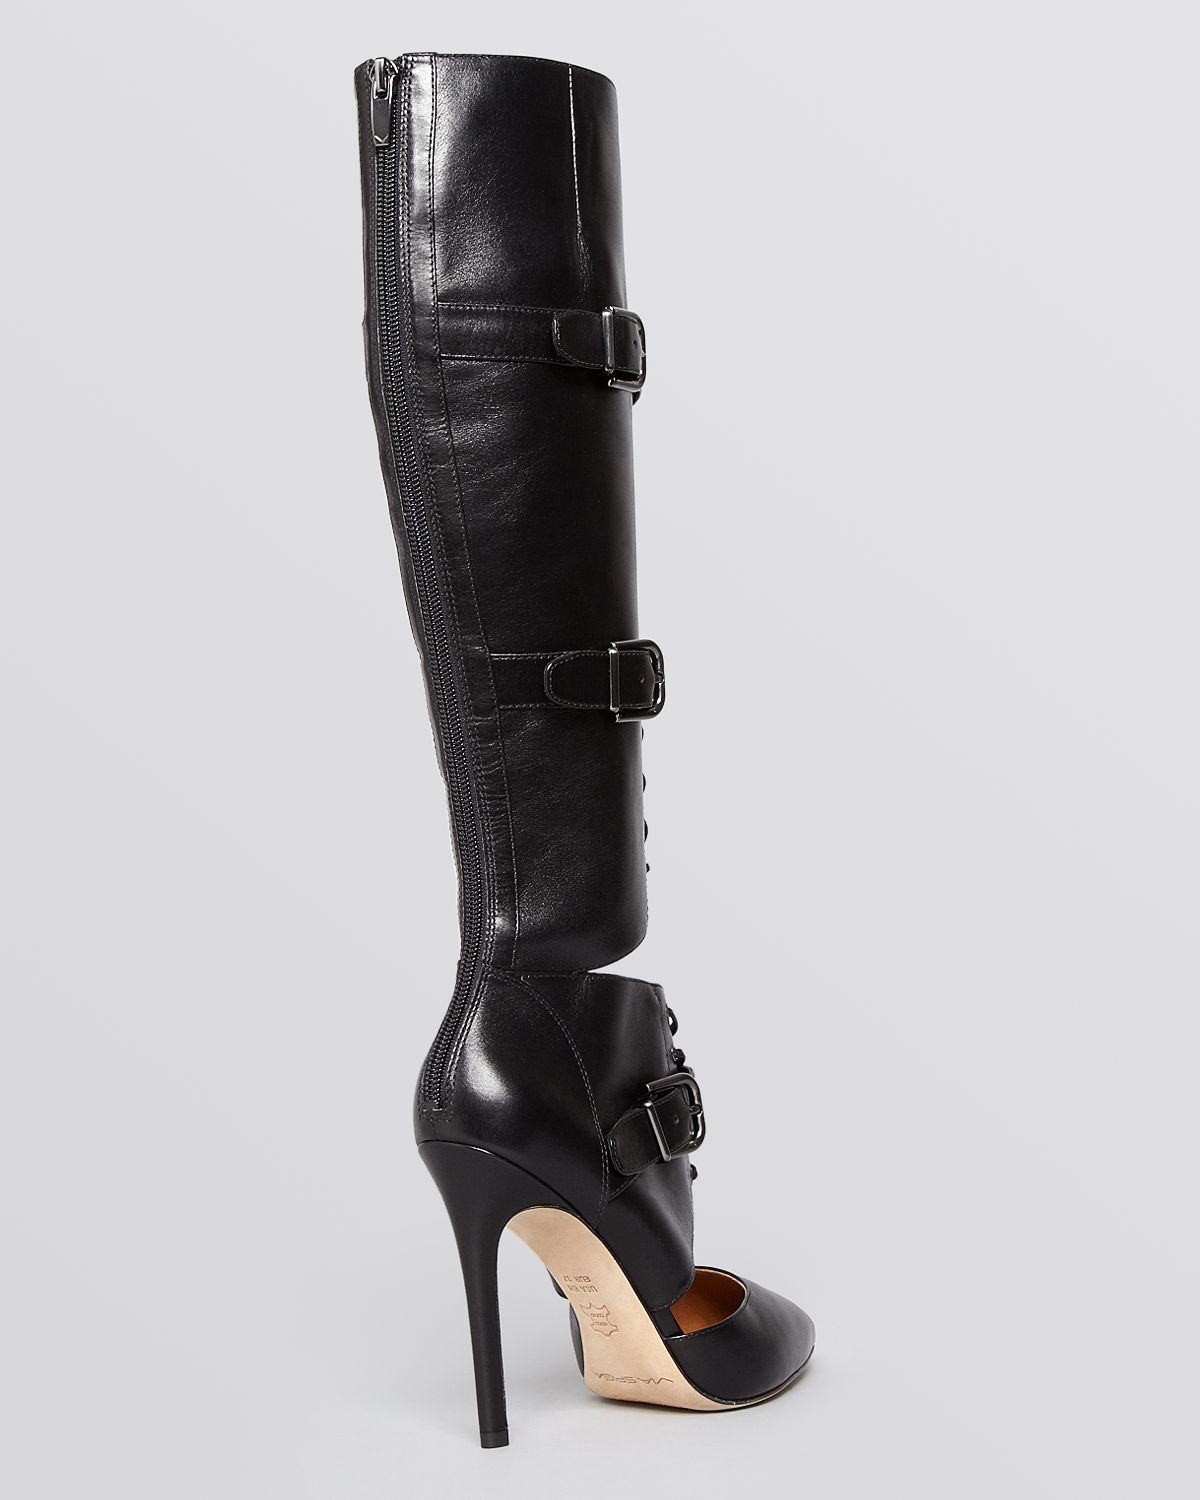 Via Spiga Pointed Toe Boots - Franya High Heel in Black - Lyst